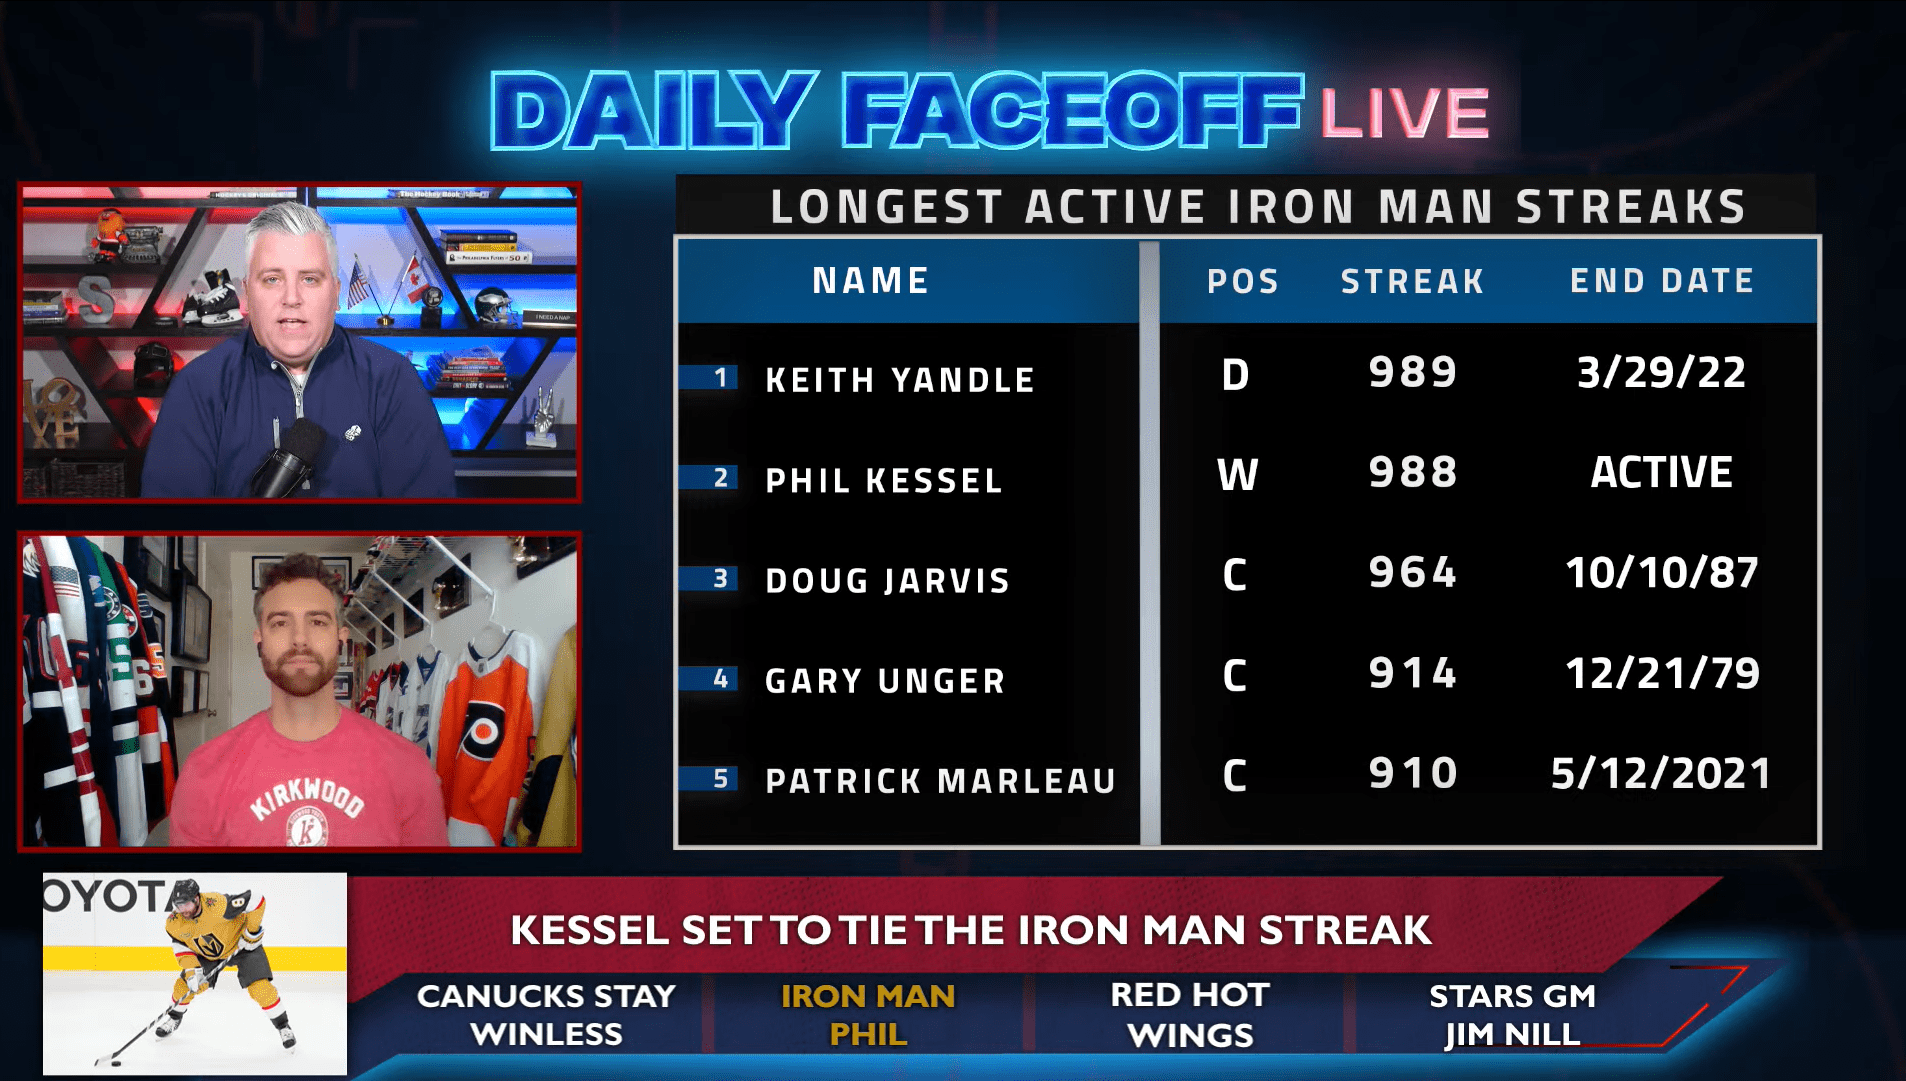 Daily Faceoff Live: Appreciating Phil Kessel’s iron man streak